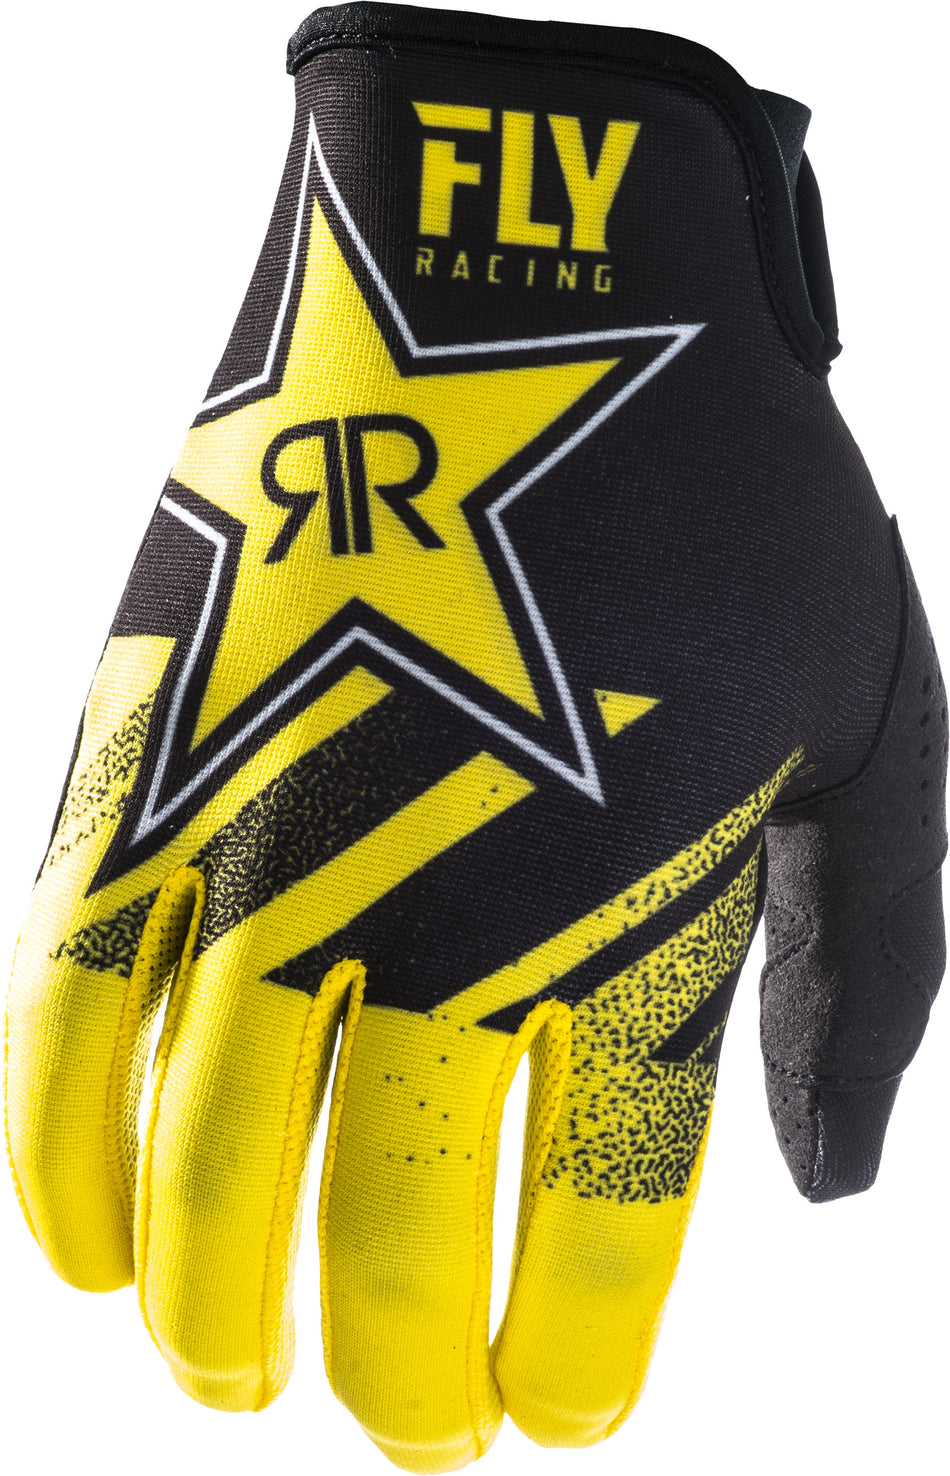 FLY RACING Lite Hydrogen Rockstar Gloves Yellow/Black Sz 11 372-01811